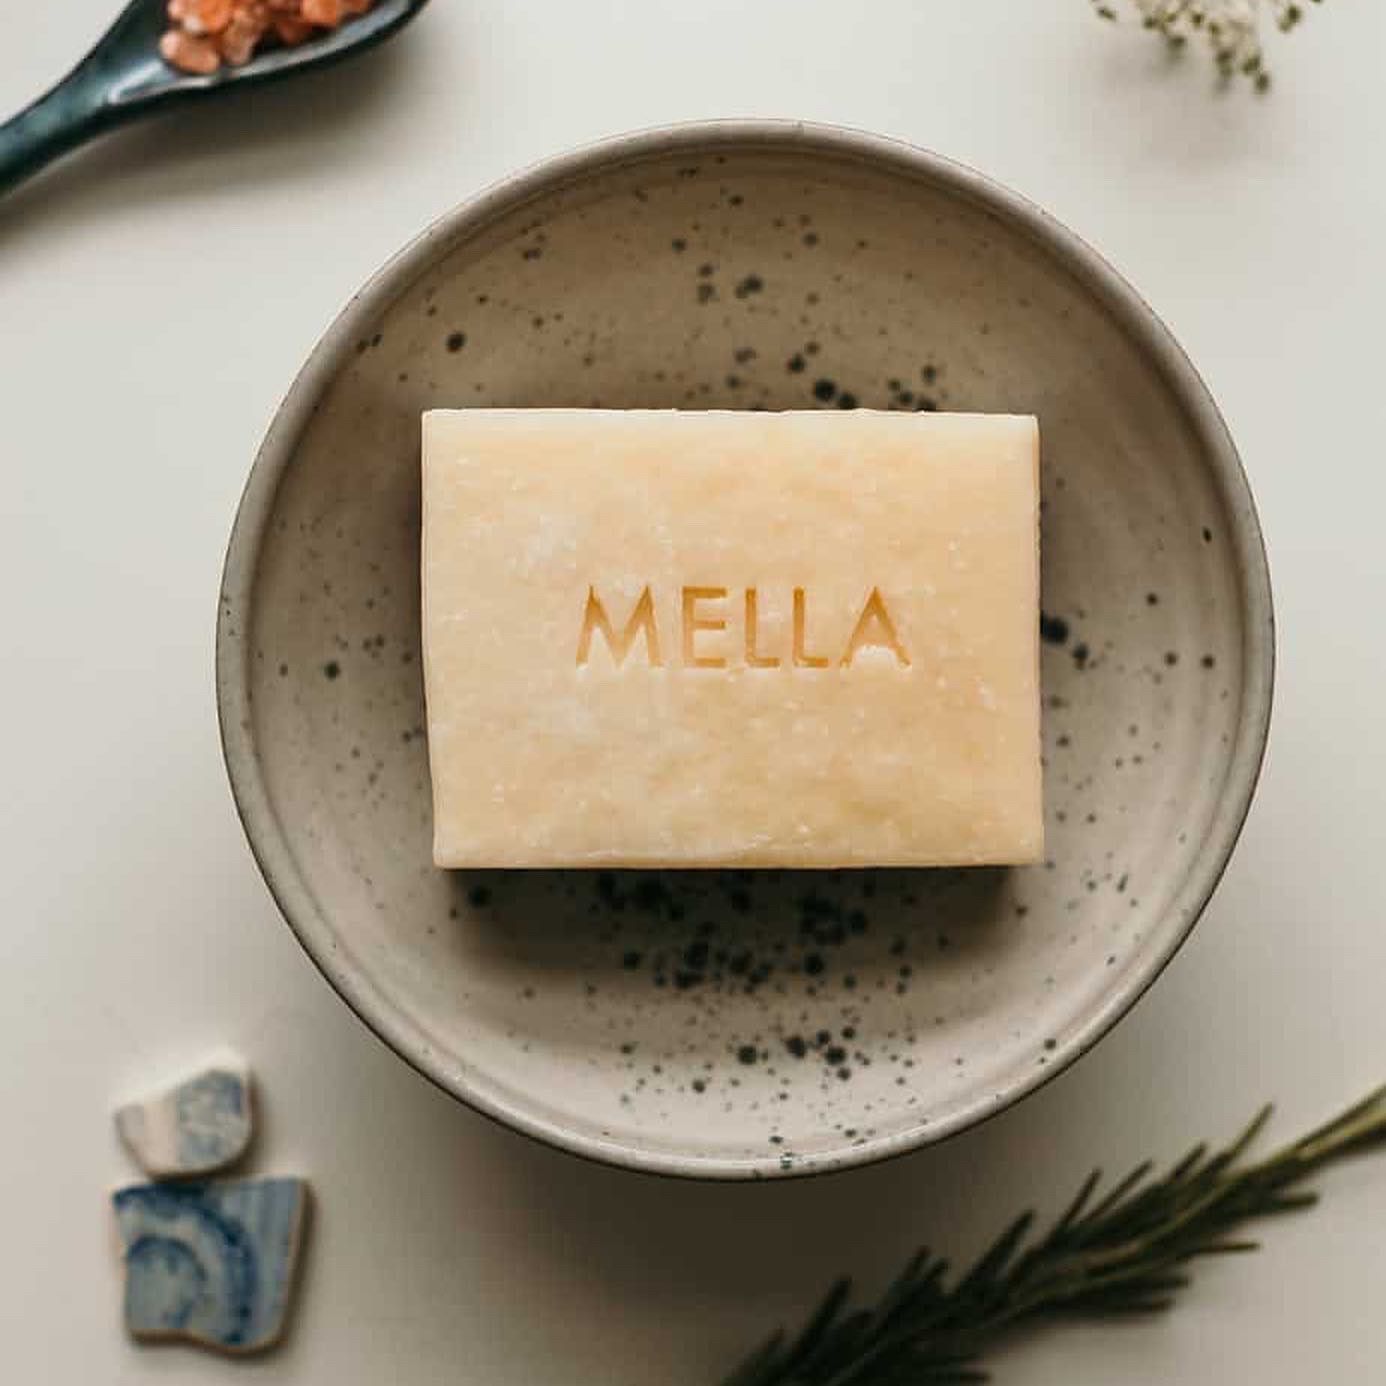 Mella Handmade Soap